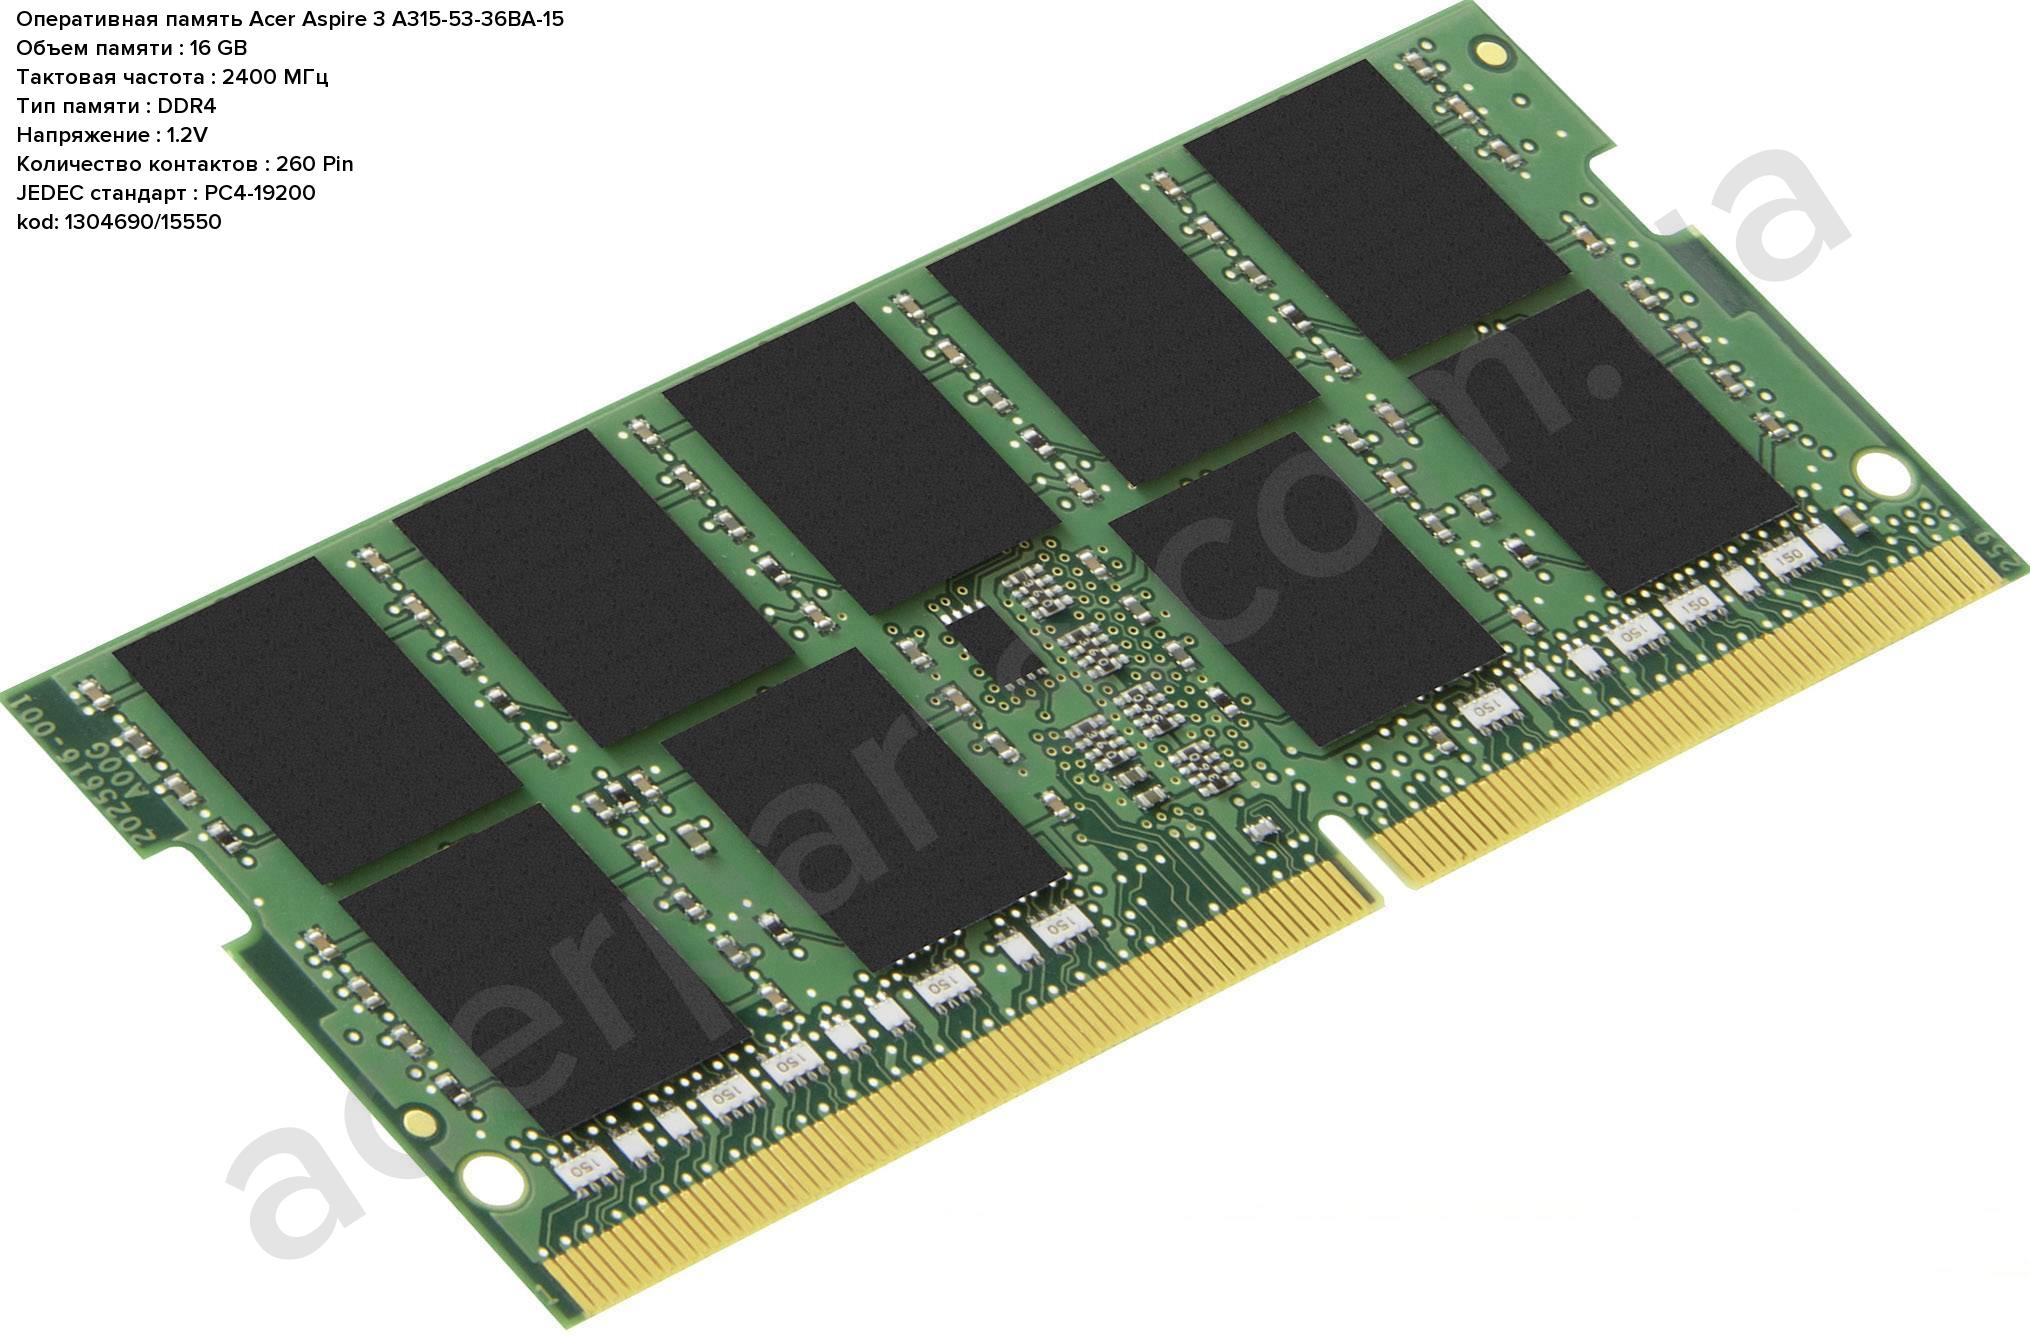 Aclarar Monumental Guardería Оперативная память Acer ASPIRE 3 A315-53-36BA-15. Купить память ноутбука Acer  ASPIRE 3 A315-53-36BA-15.